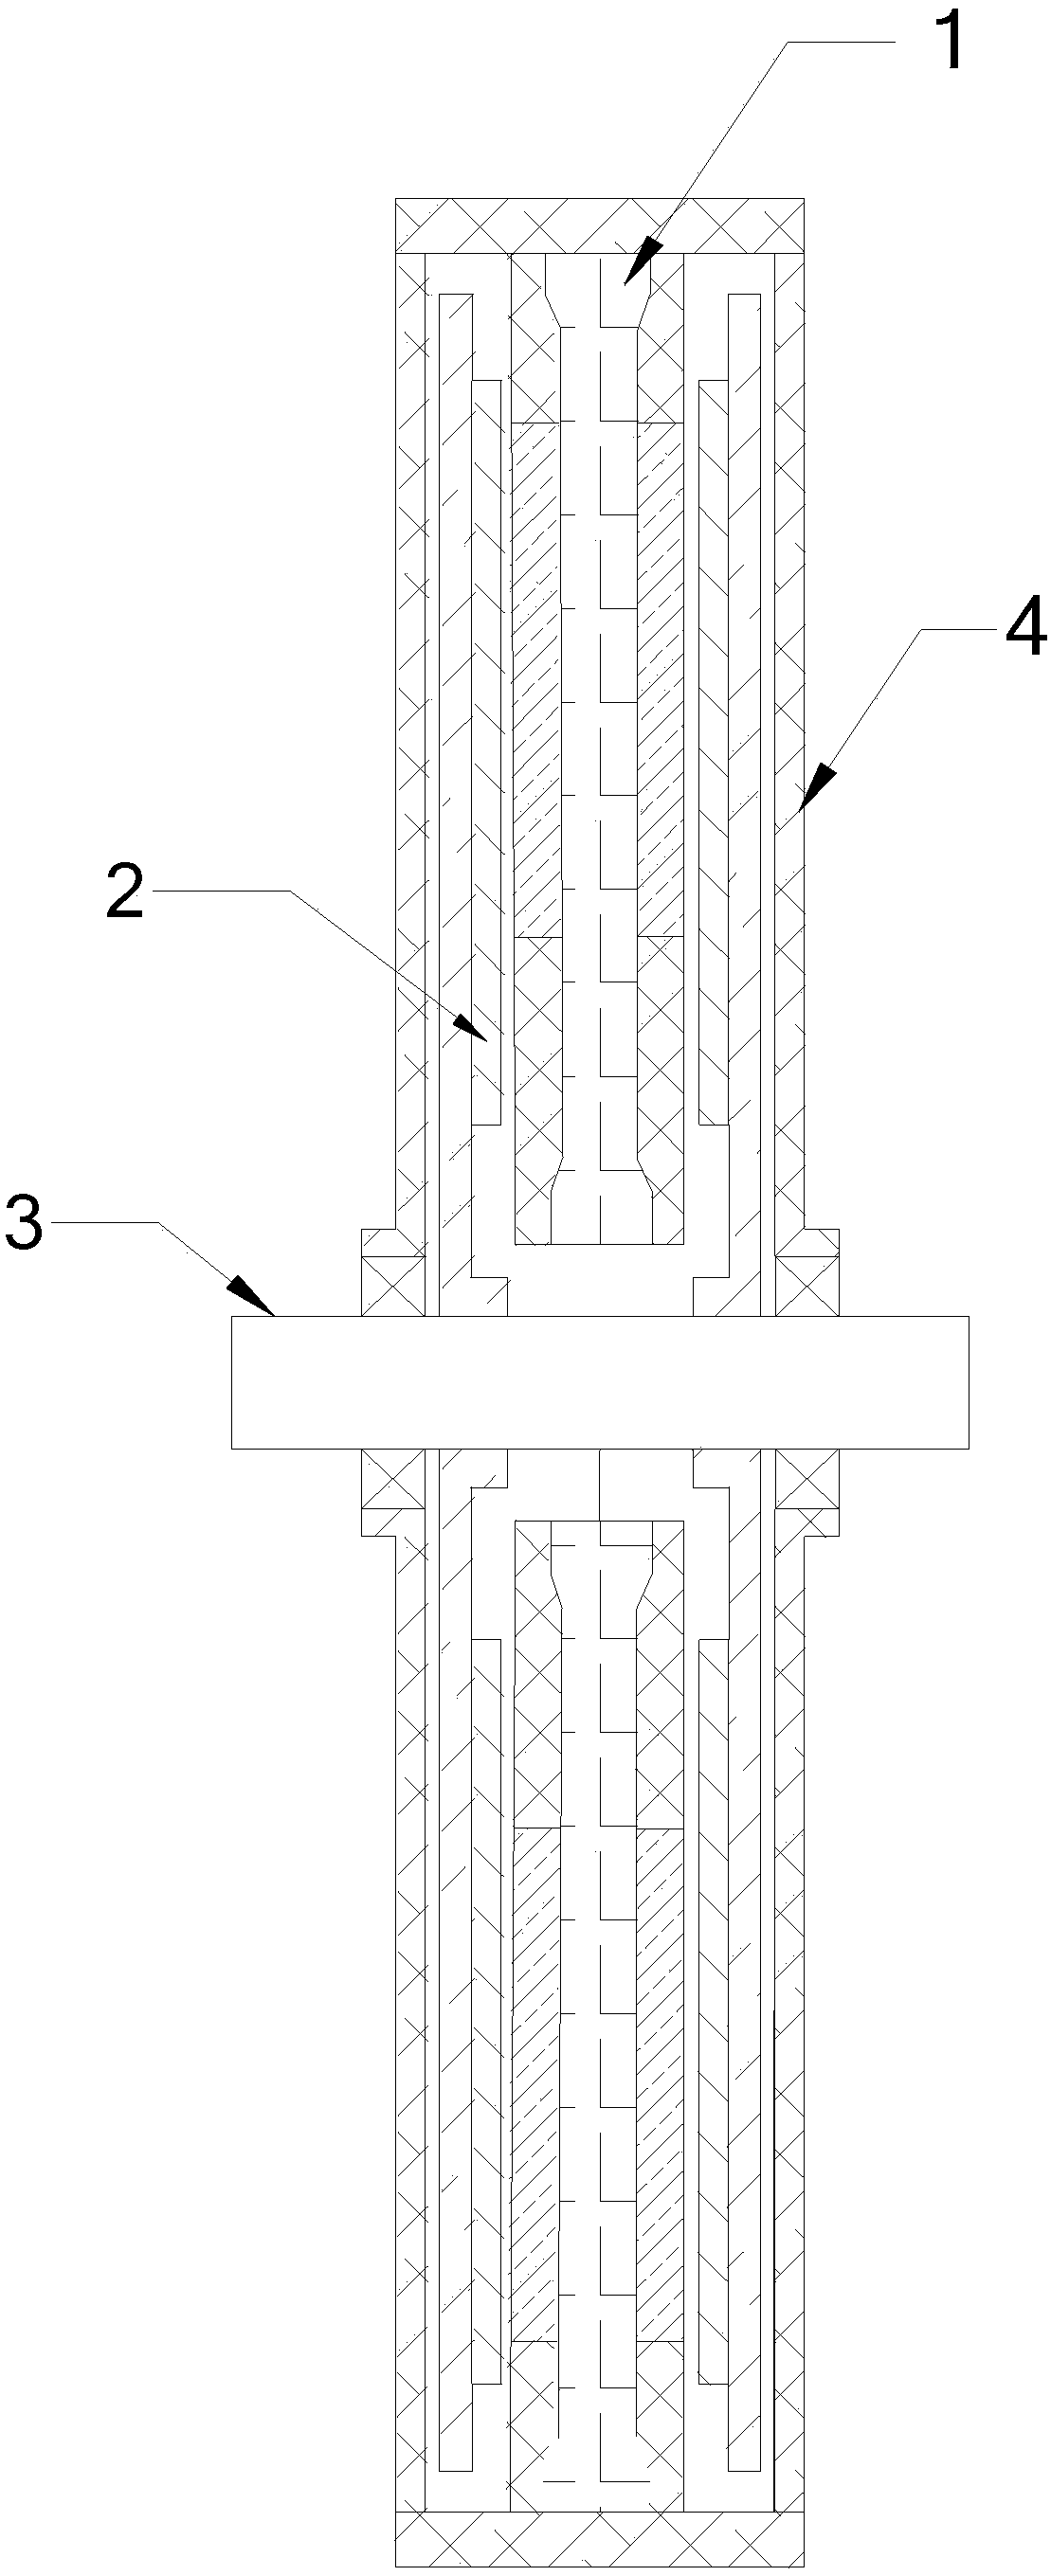 Disc type ironless flux modulation motor